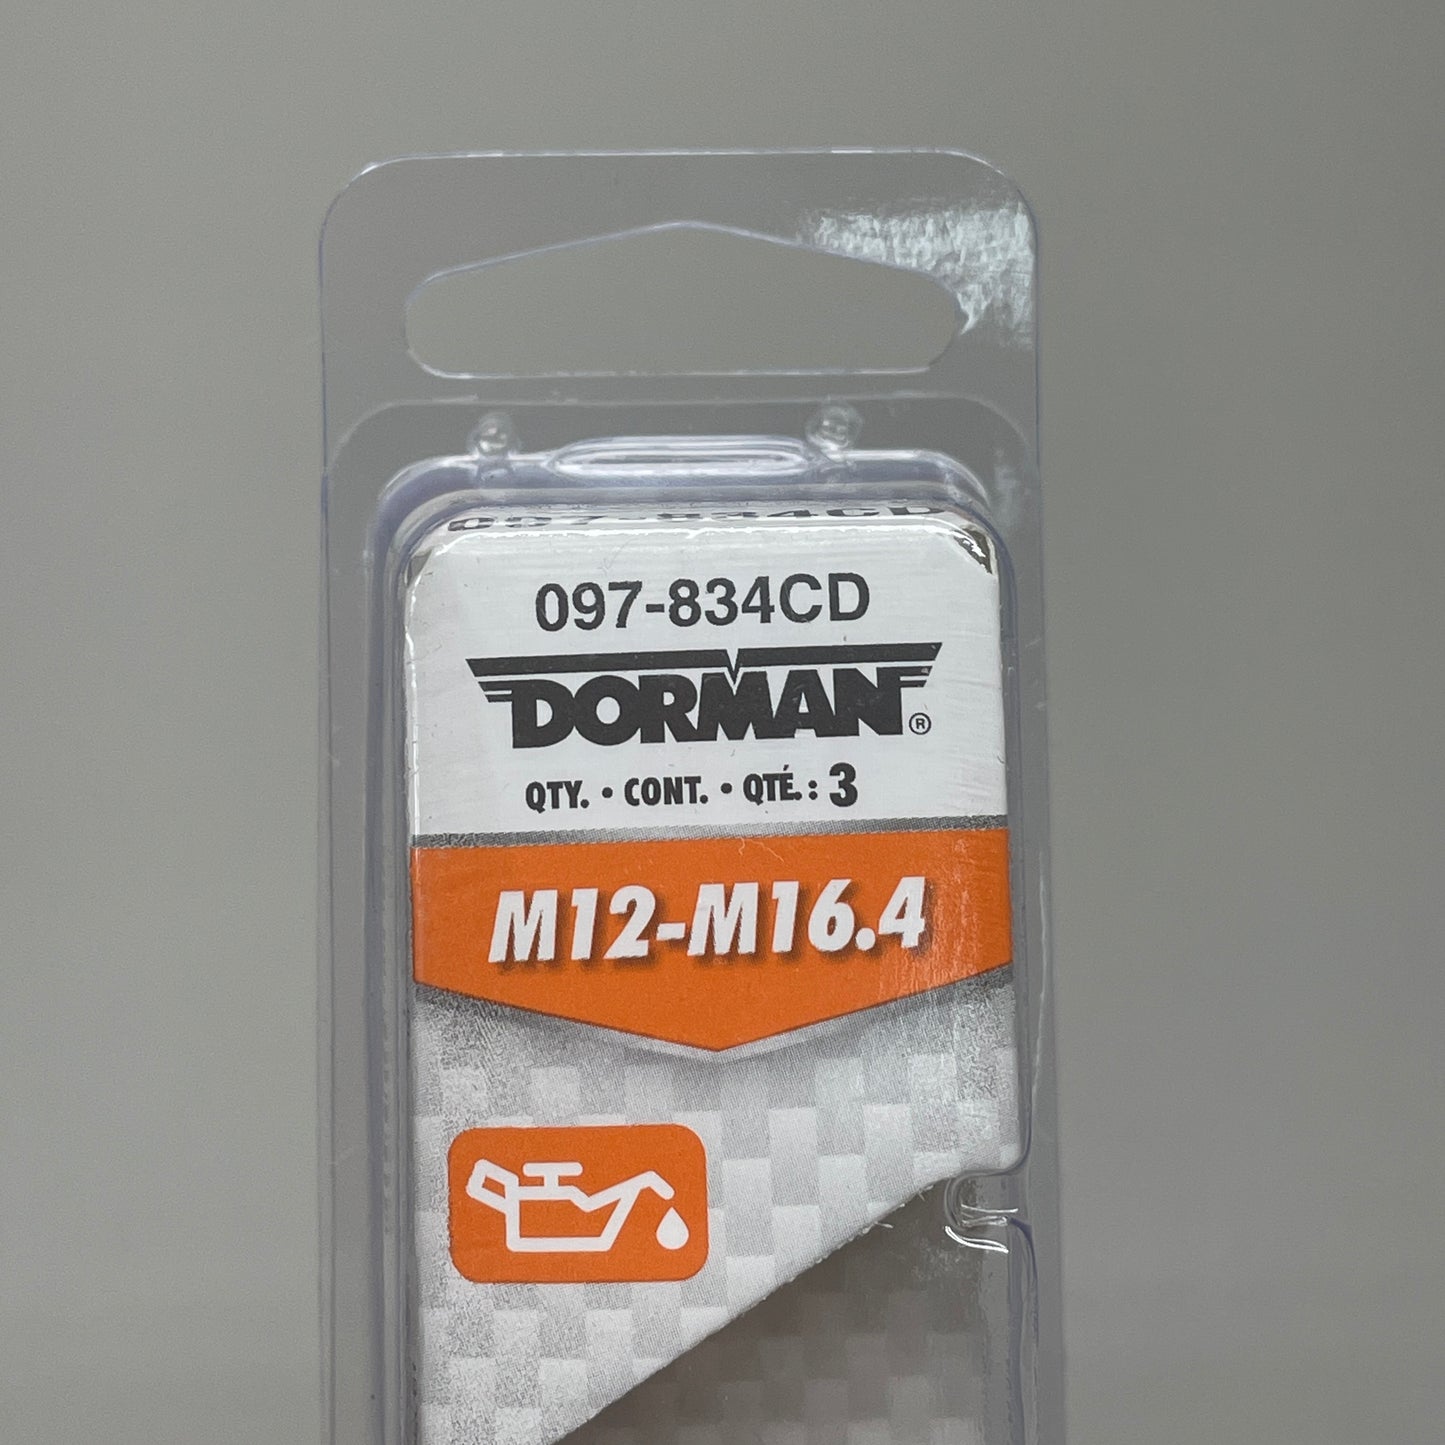 DORMAN (5 Pack) Copper Oil Pan Drain Plug Gaskets 097-834CD